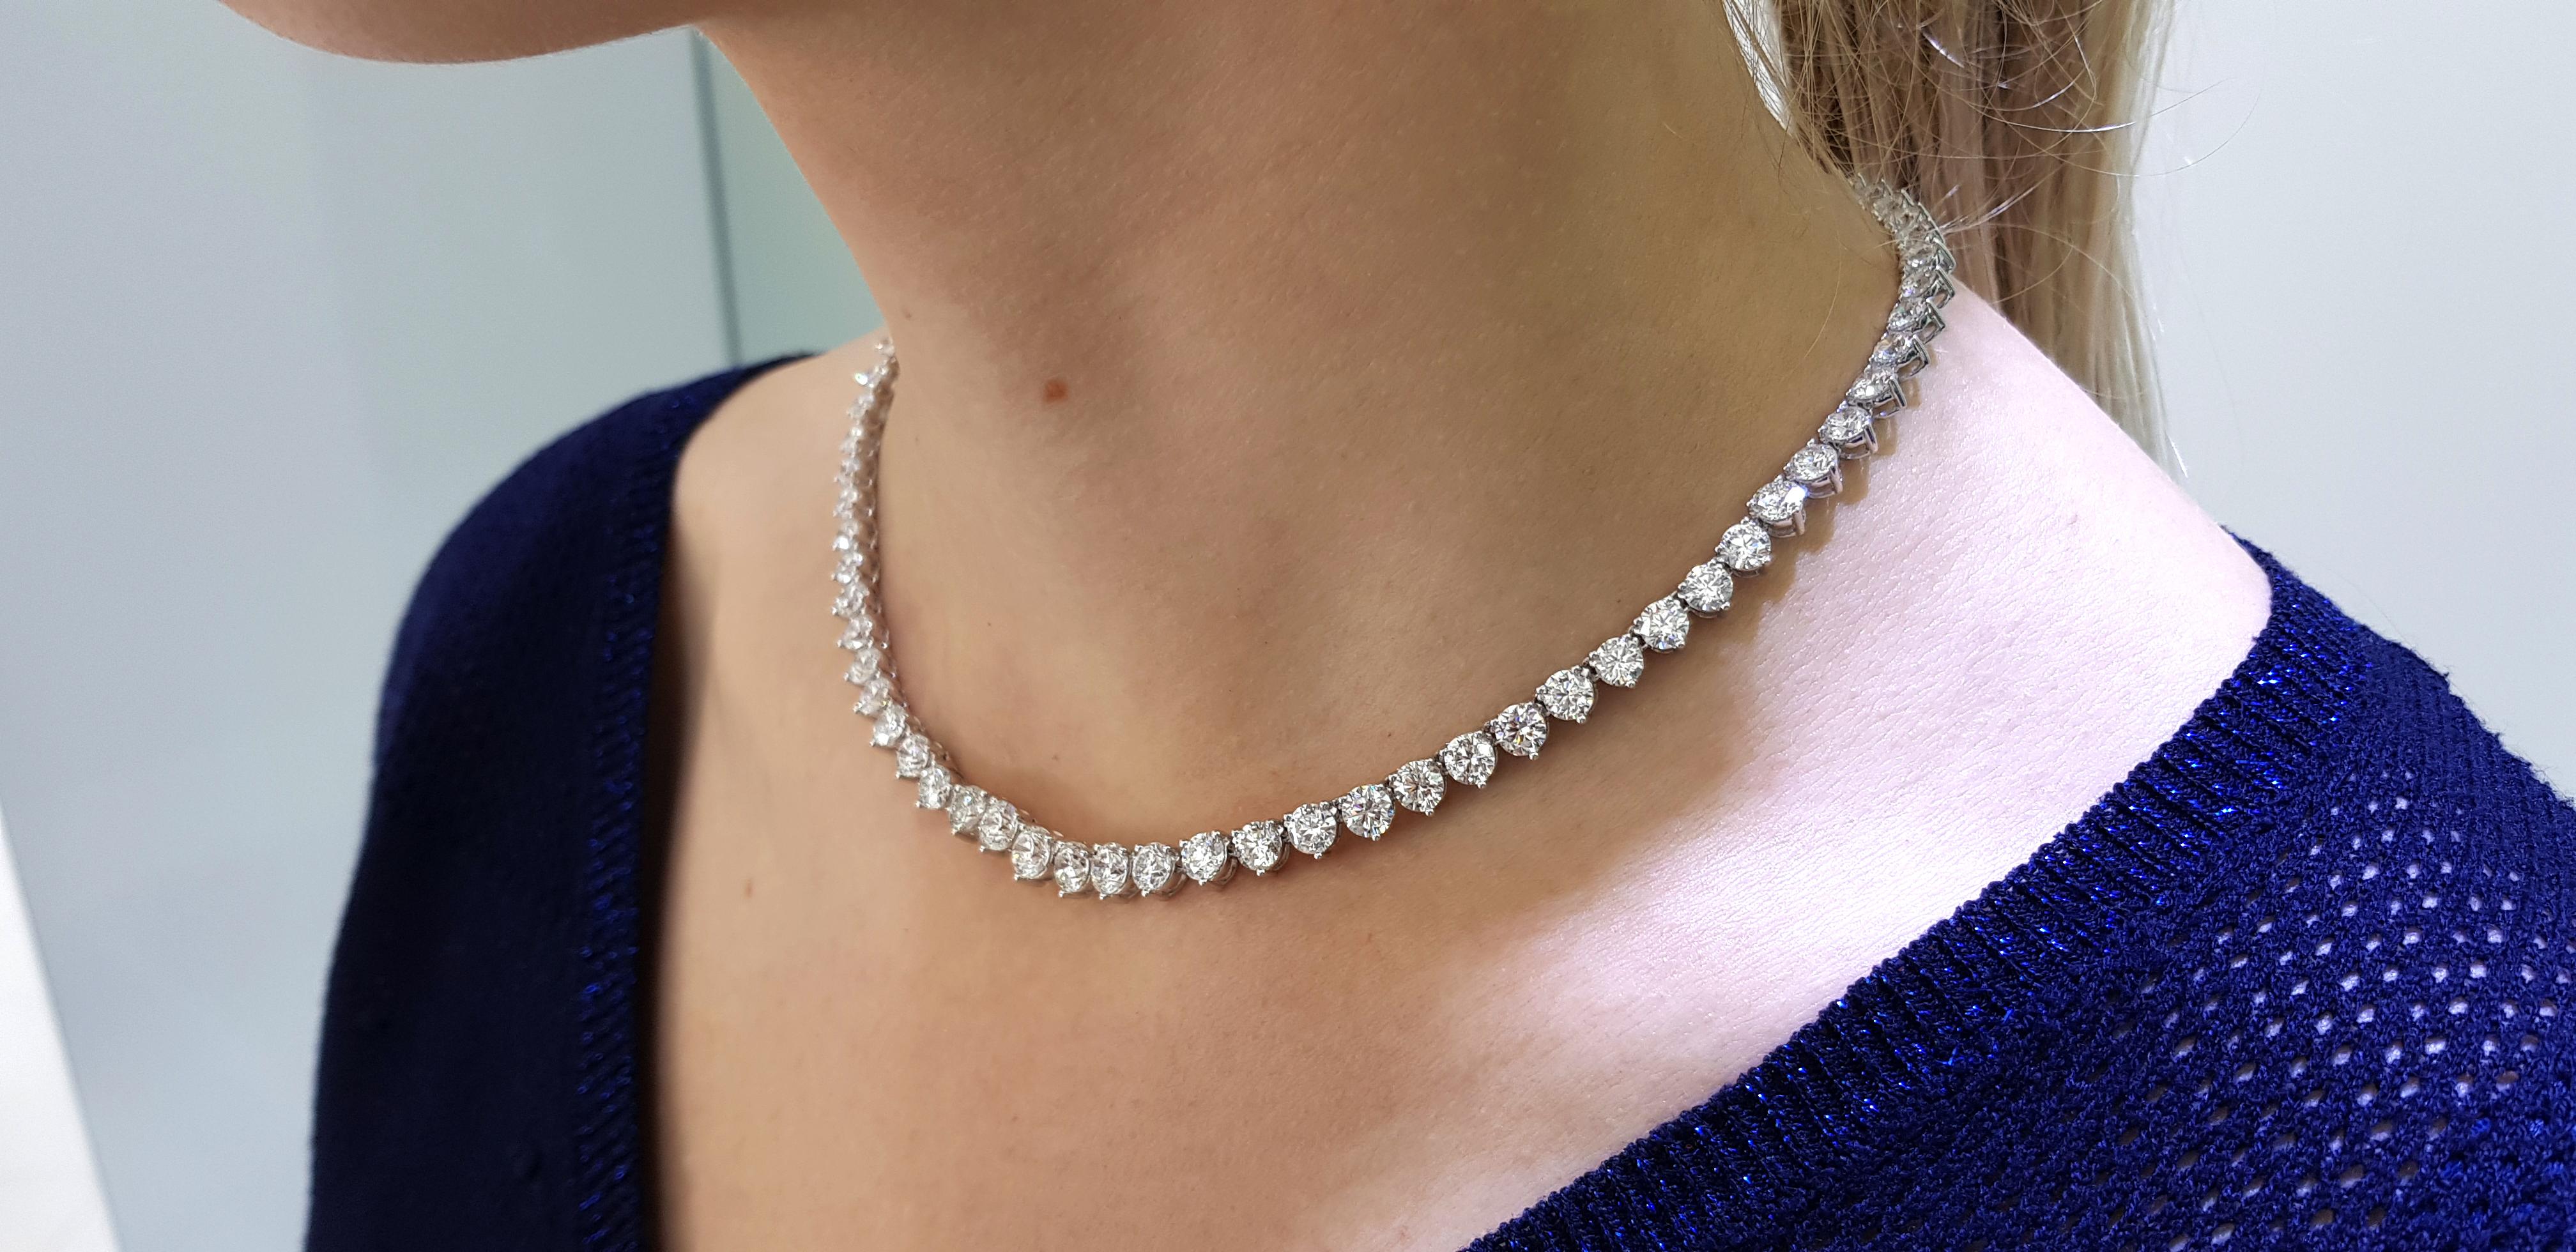 30 carat diamond tennis necklace